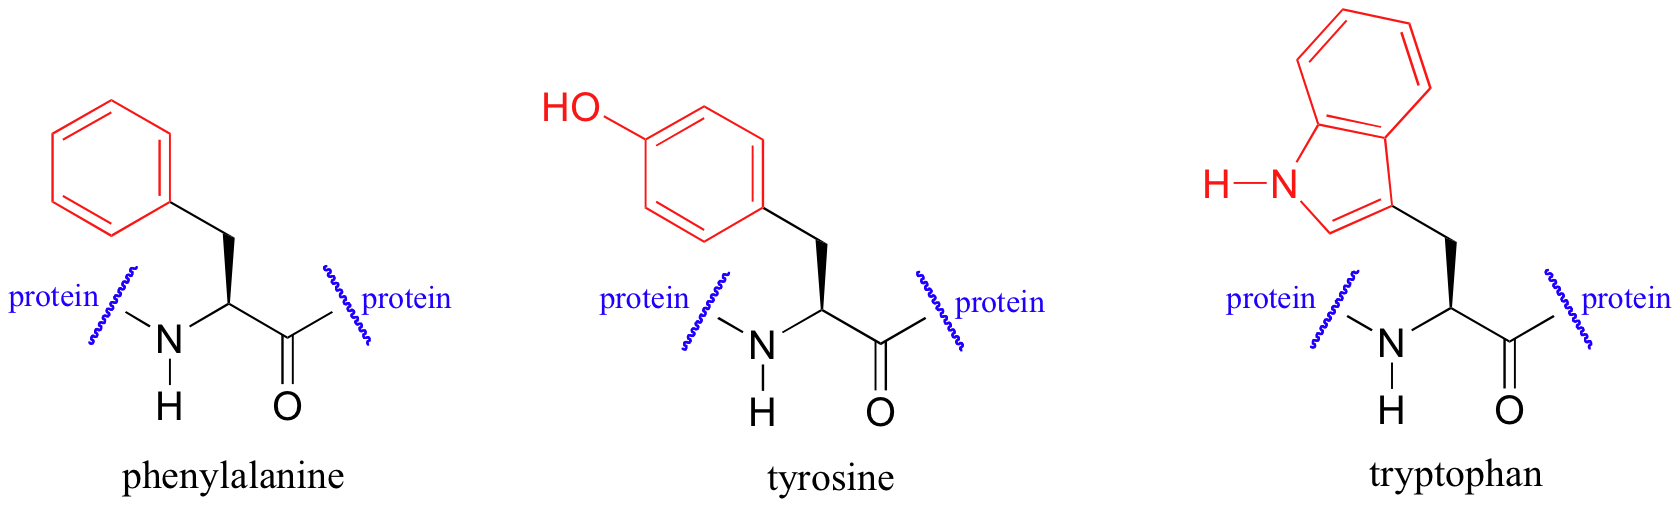 Three aromatic amino acids. From left to right: phenylalanine, tyrosine, tryptophan.